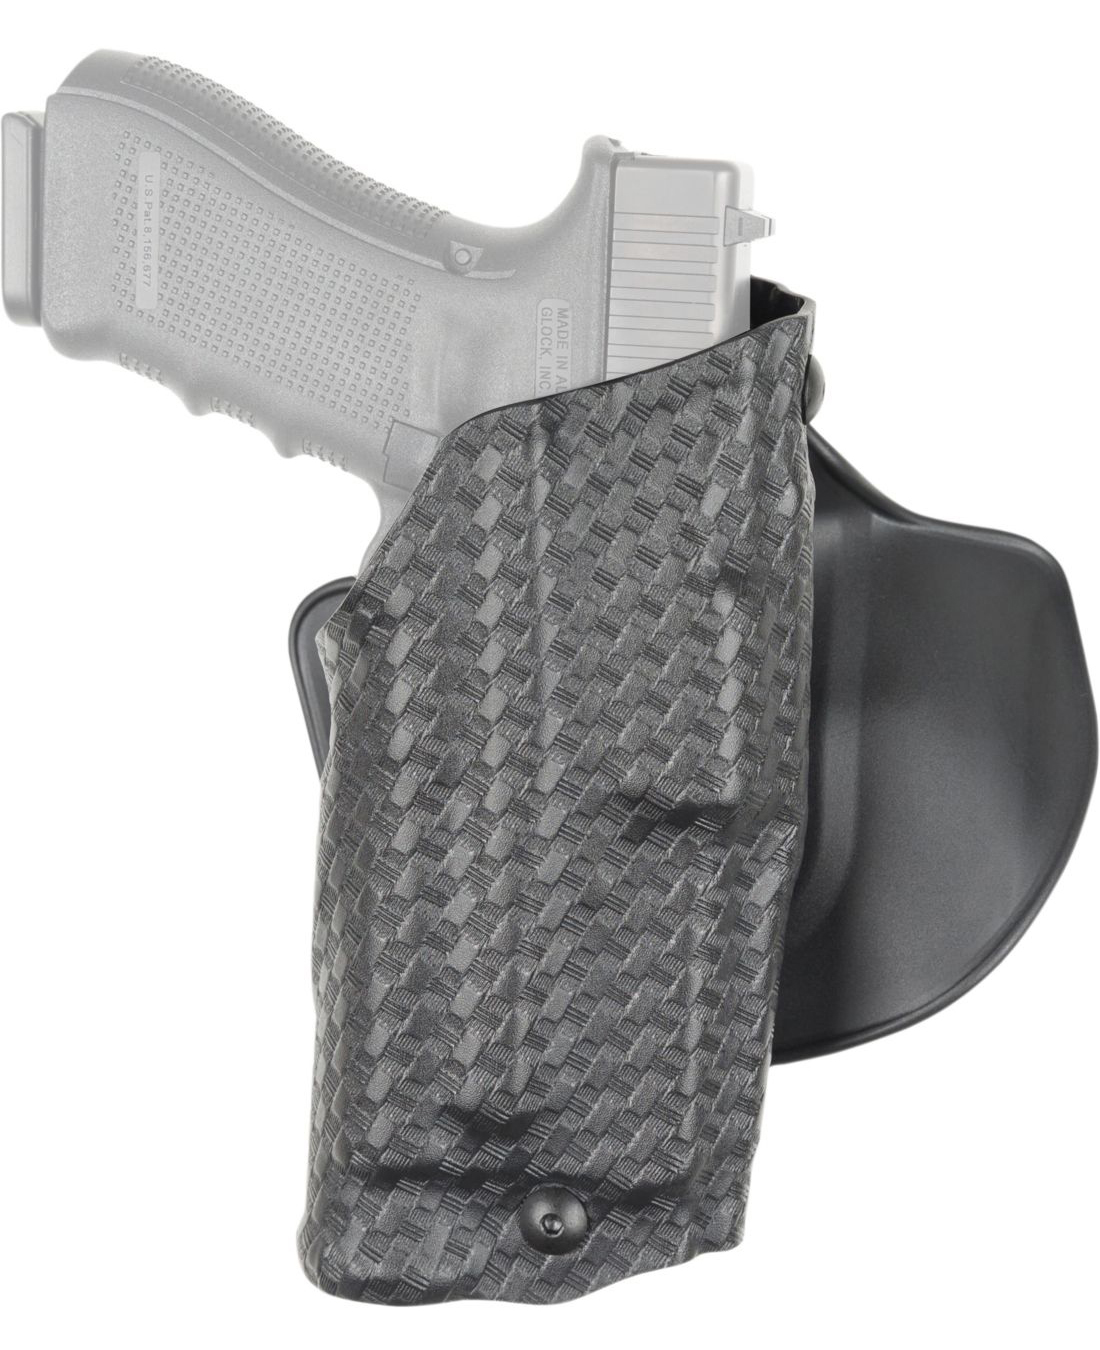 STX Black Finish Safariland Glock 17 22 6378 ALS Concealment Paddle Holster